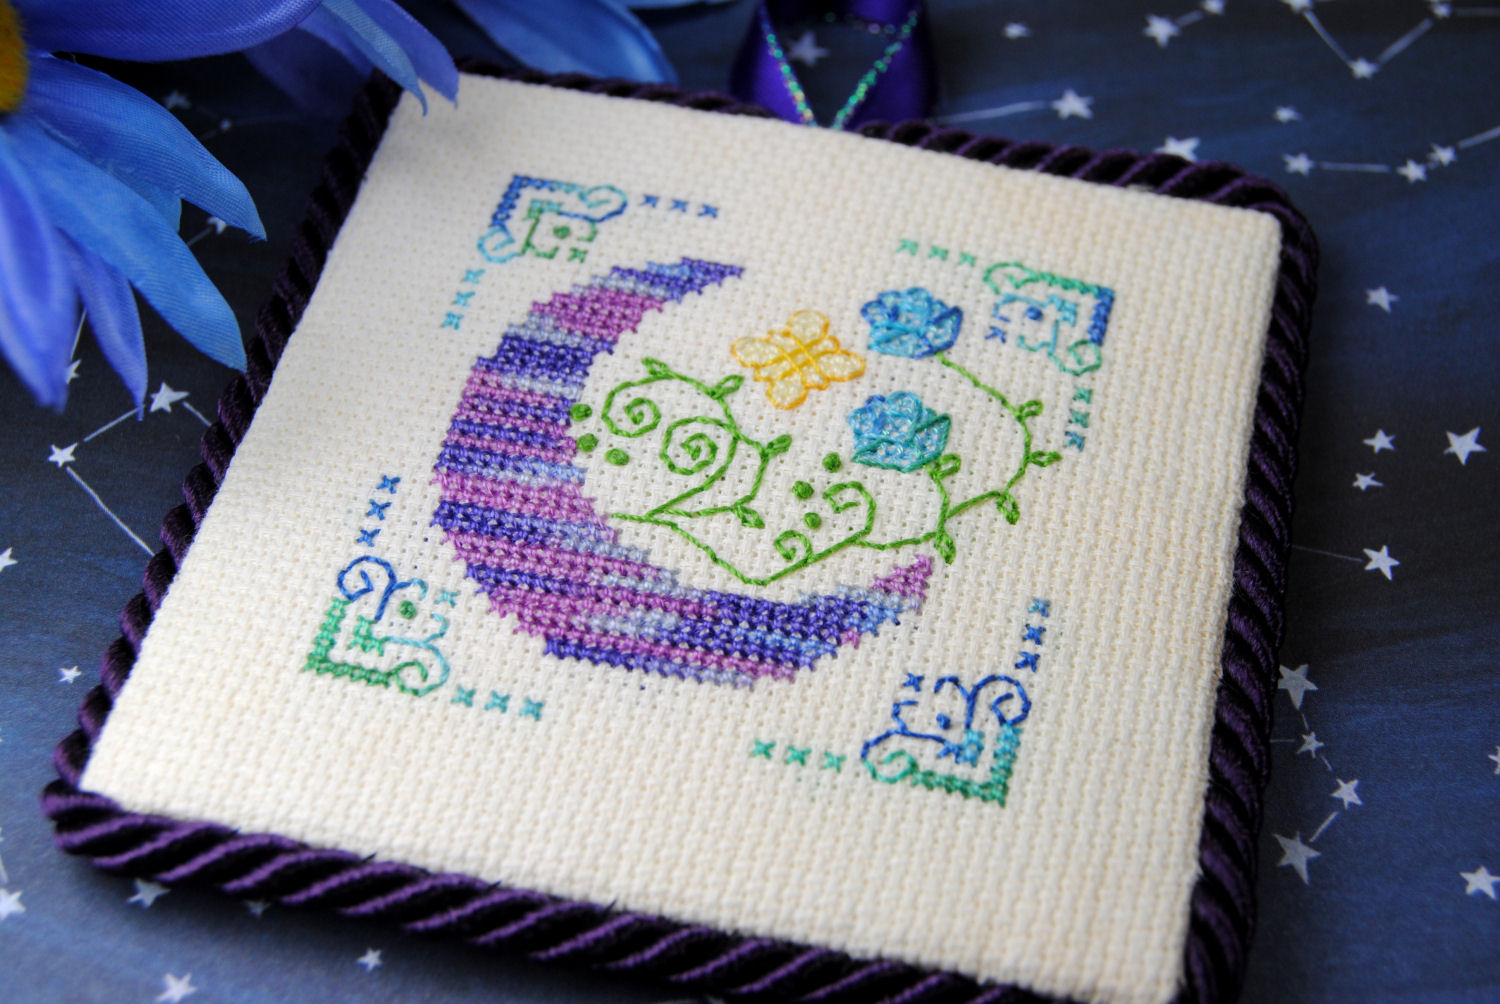 Lilac Aida Cross Stitch Fabric - 14 count - Stitched Modern